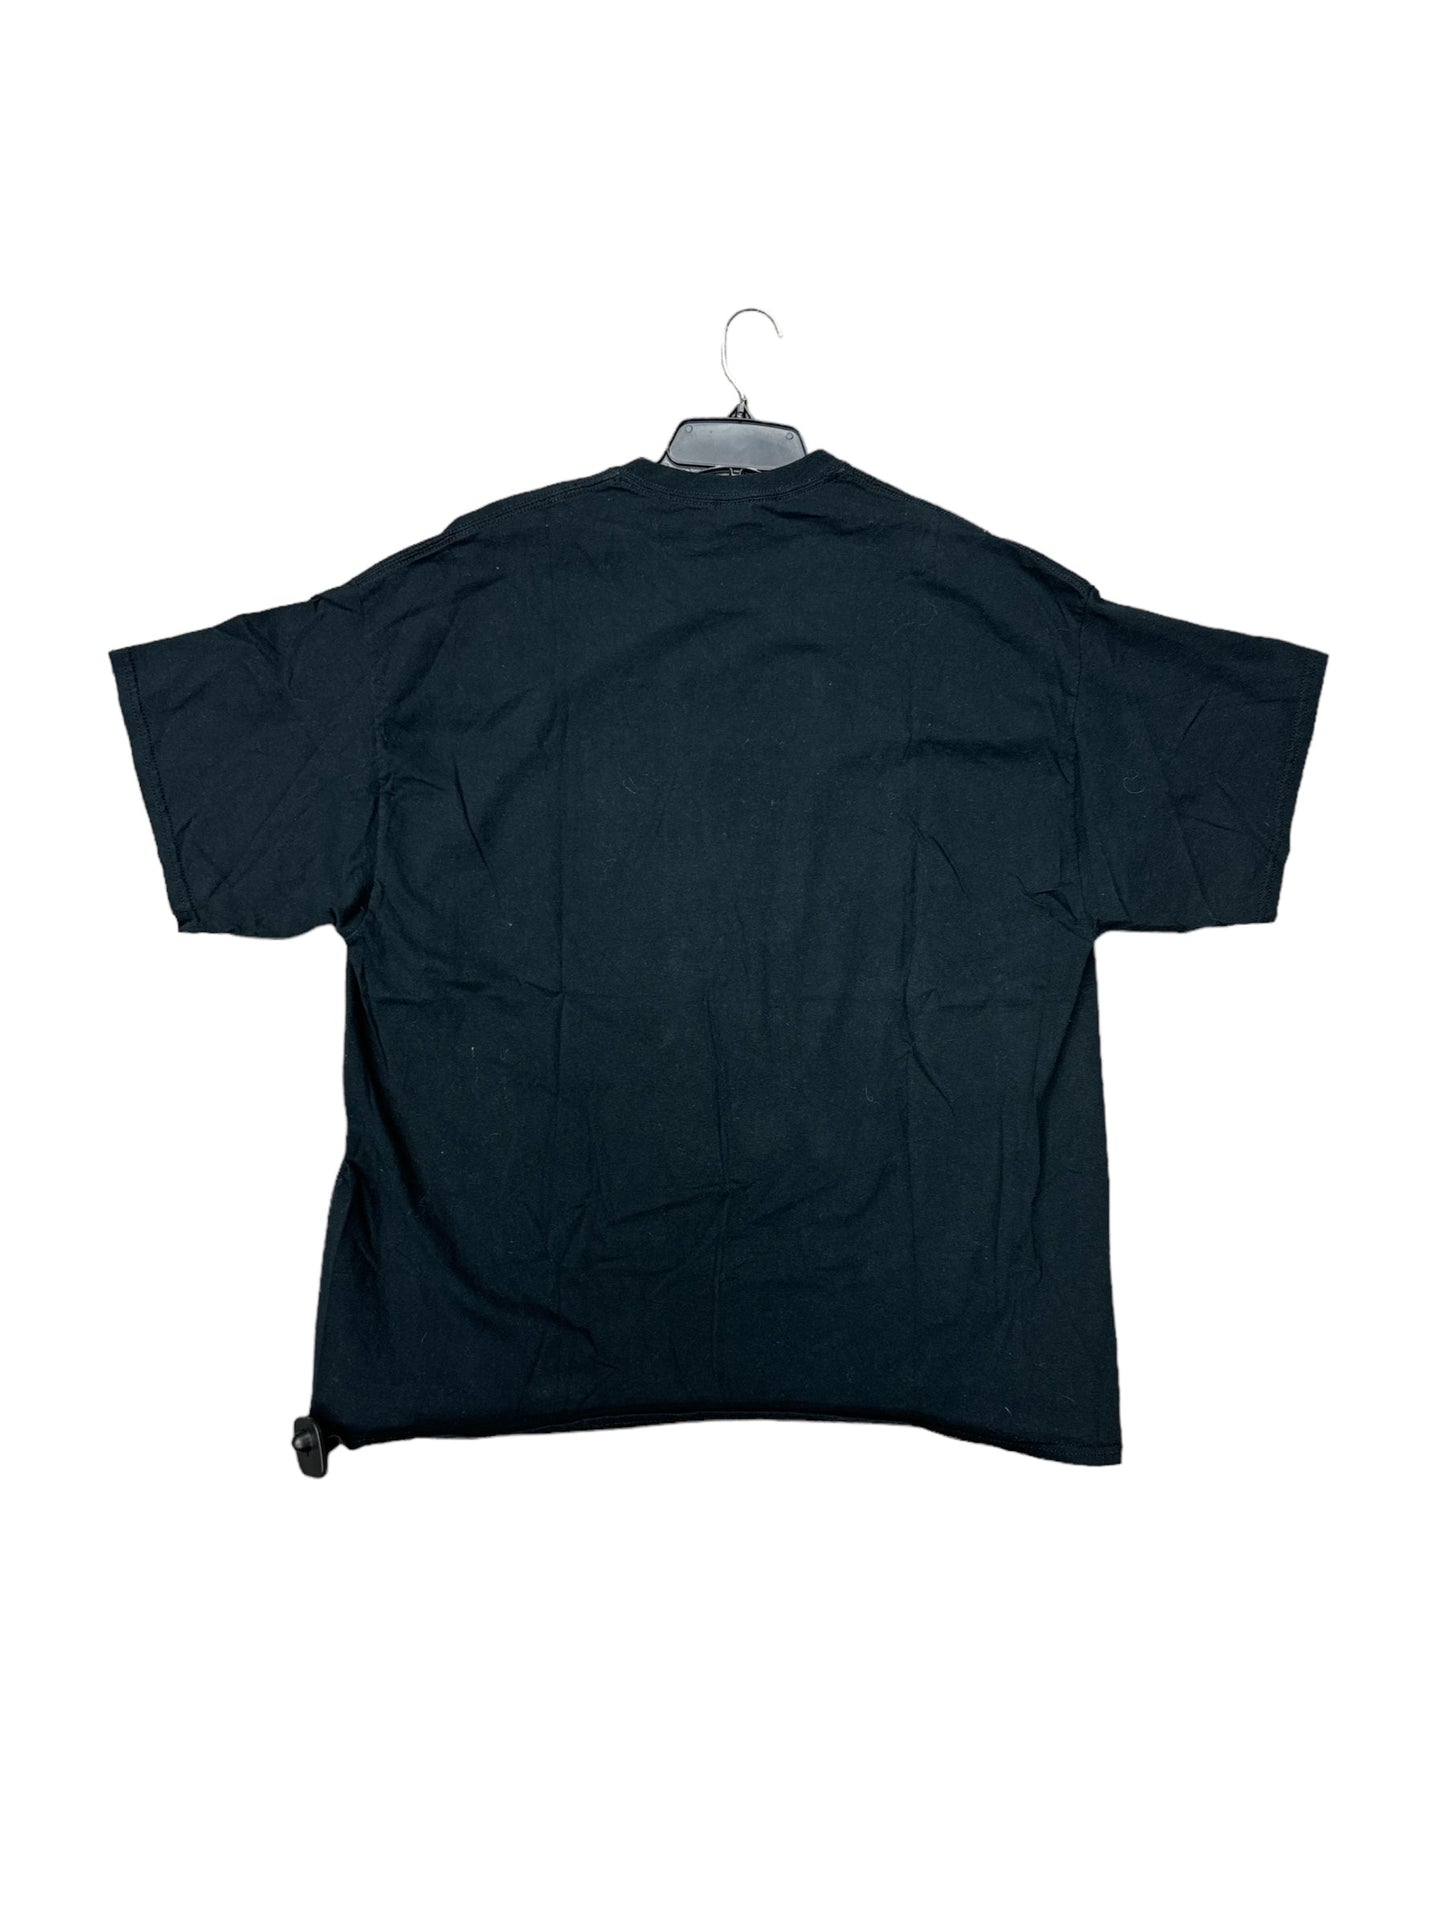 Black Top Short Sleeve Gildan, Size 2x